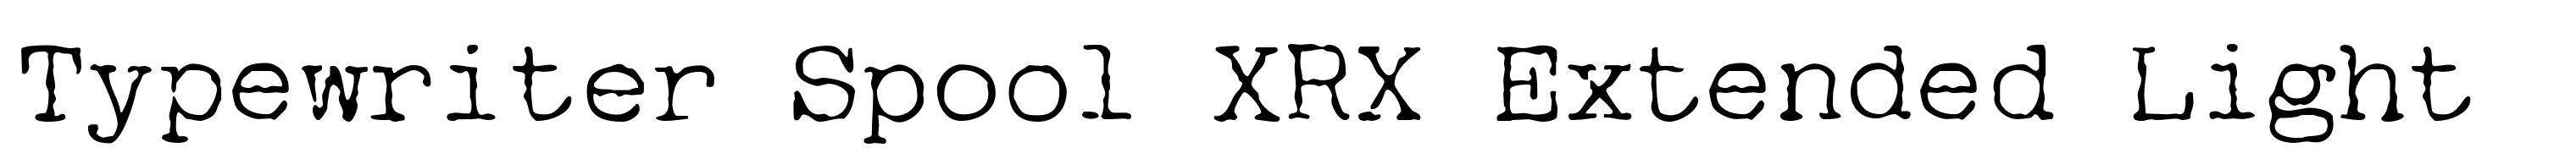 Typewriter Spool XRX Extended Light